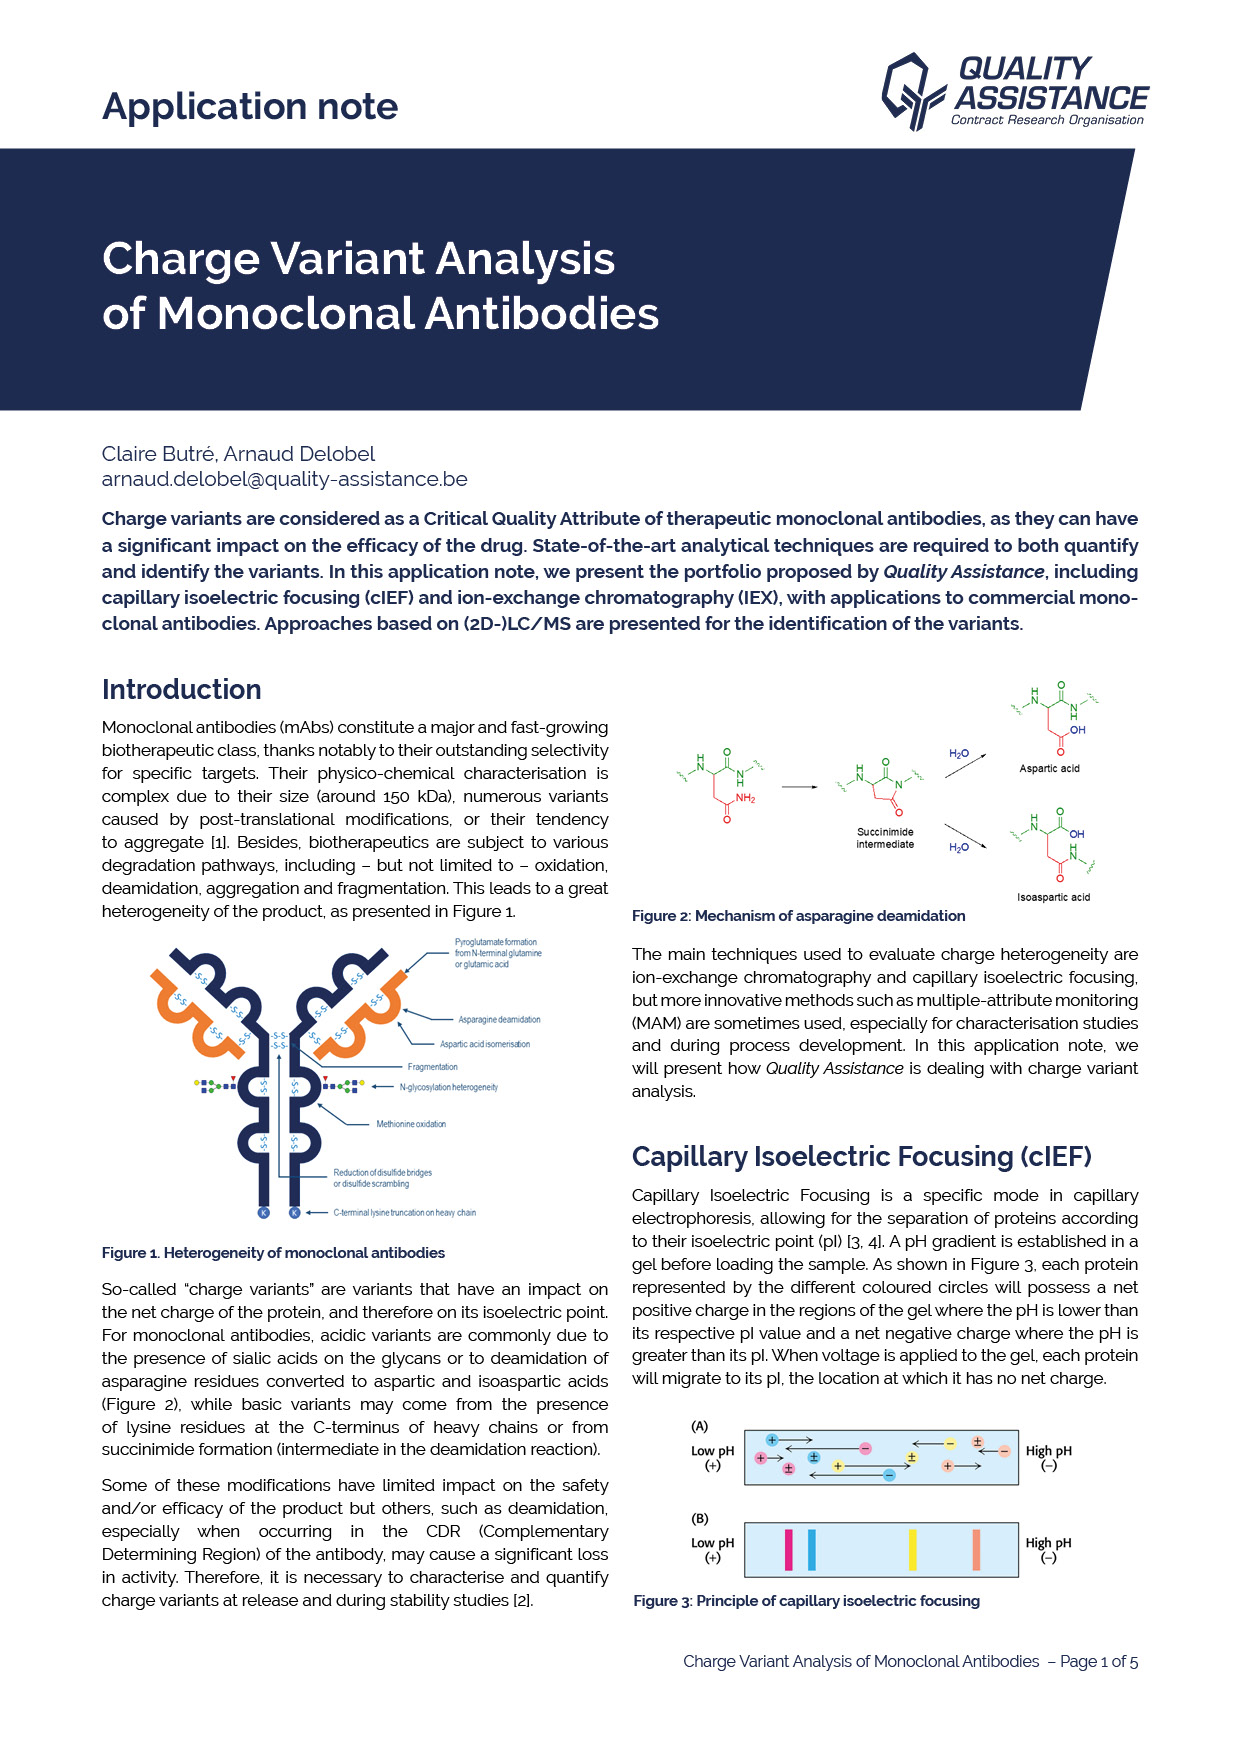 Charge variants analysis of monoclonal antibodies